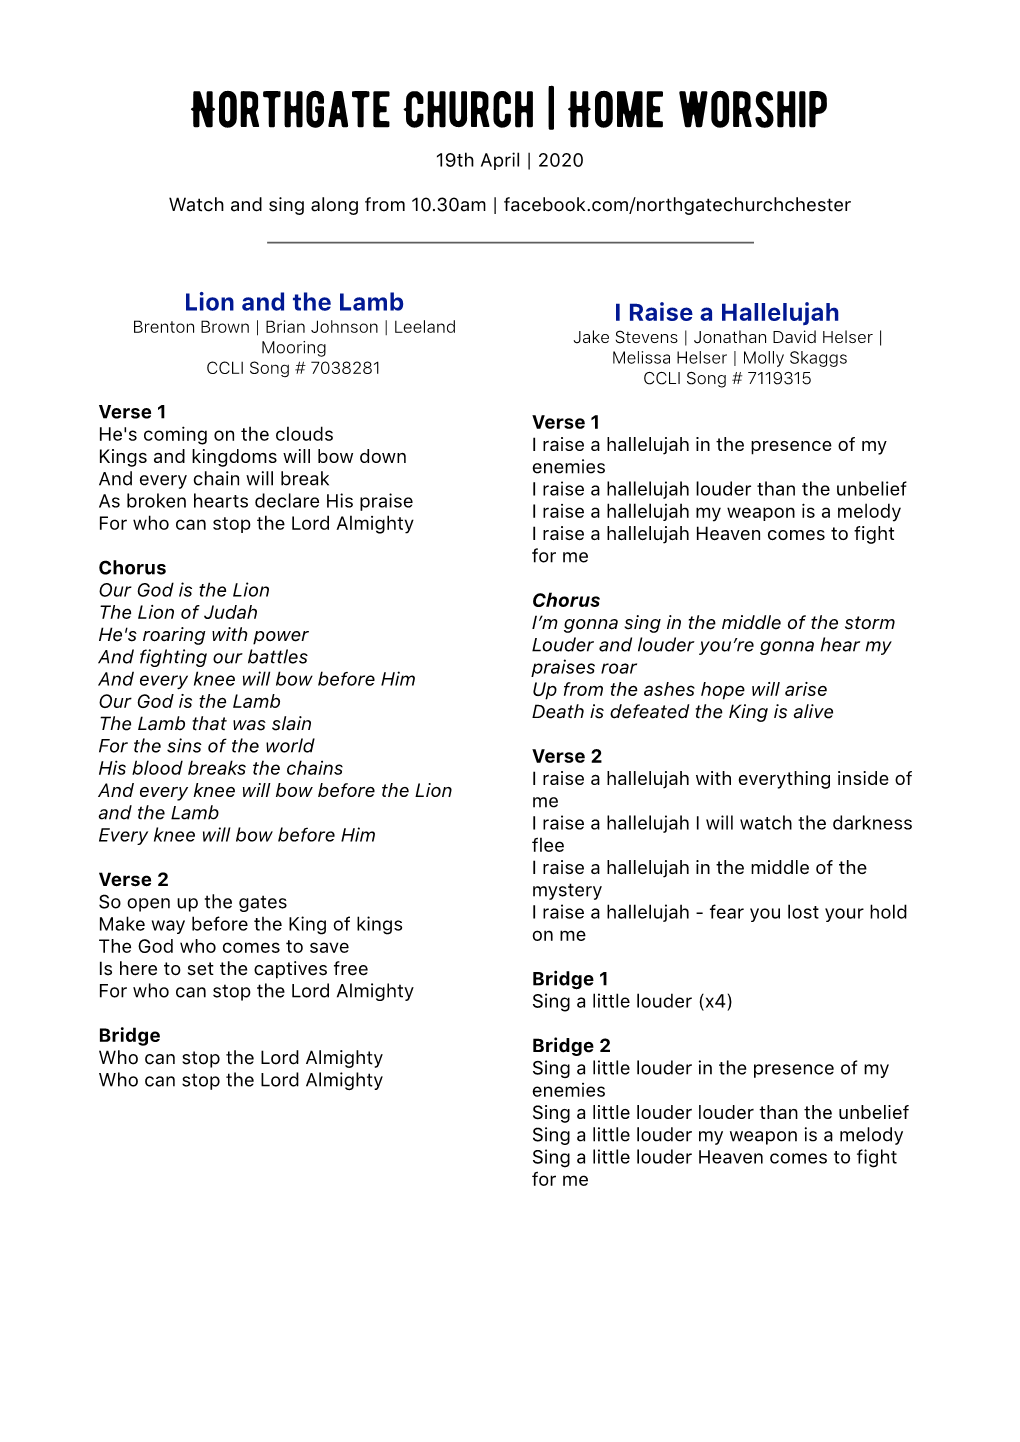 Live Worship Lyrics 19/4/20